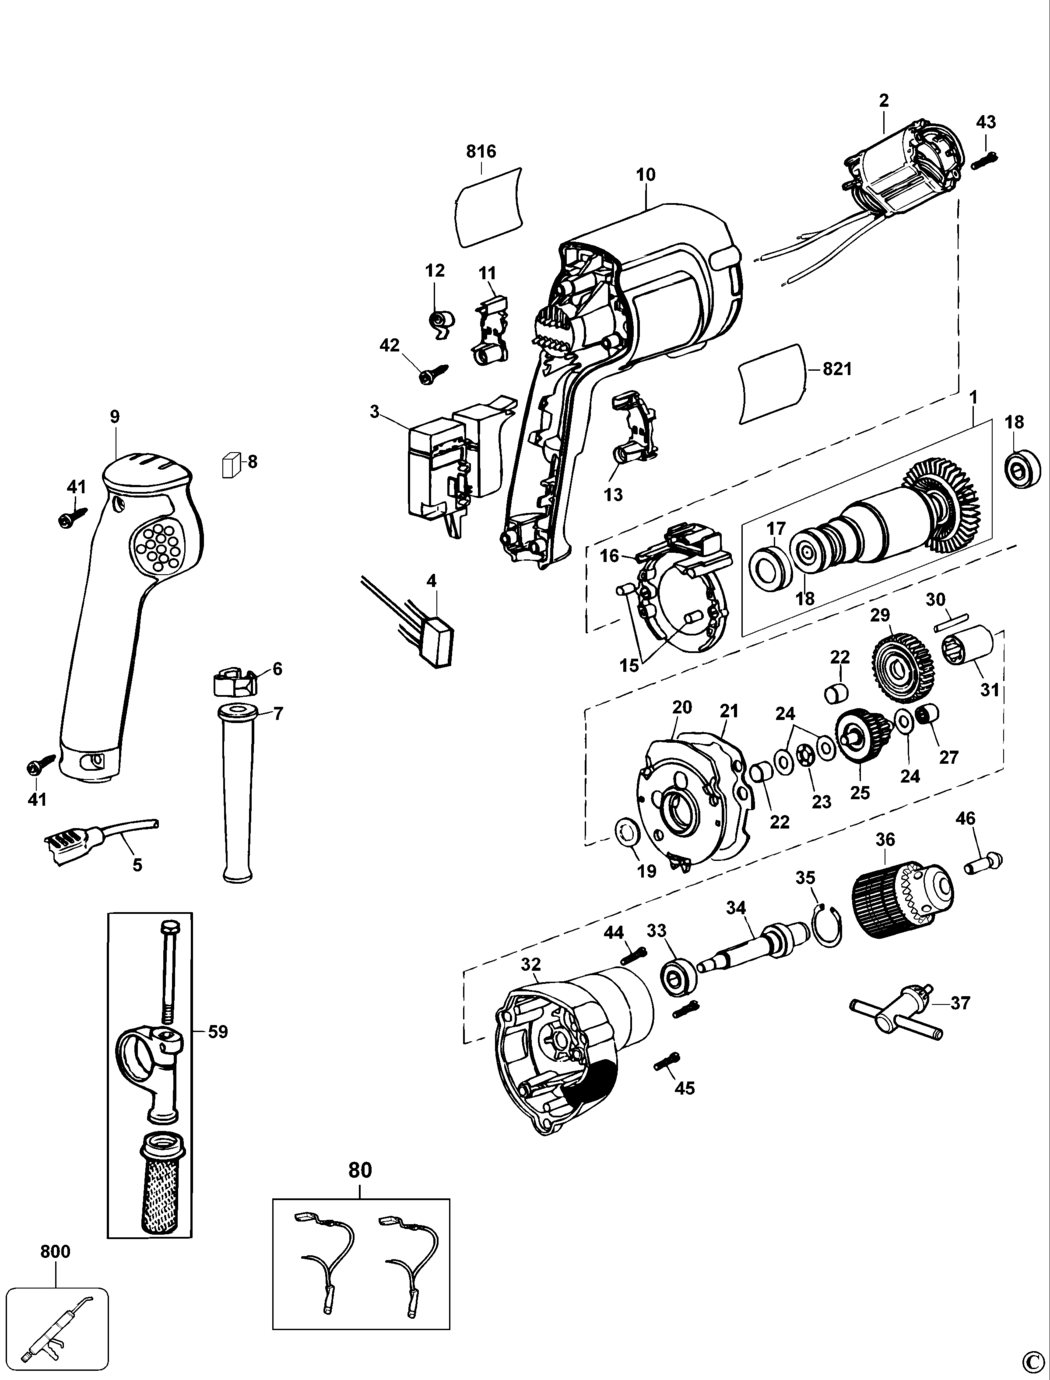 Dewalt D21101 Type 2 Rotary Hammer Drill Spare Parts